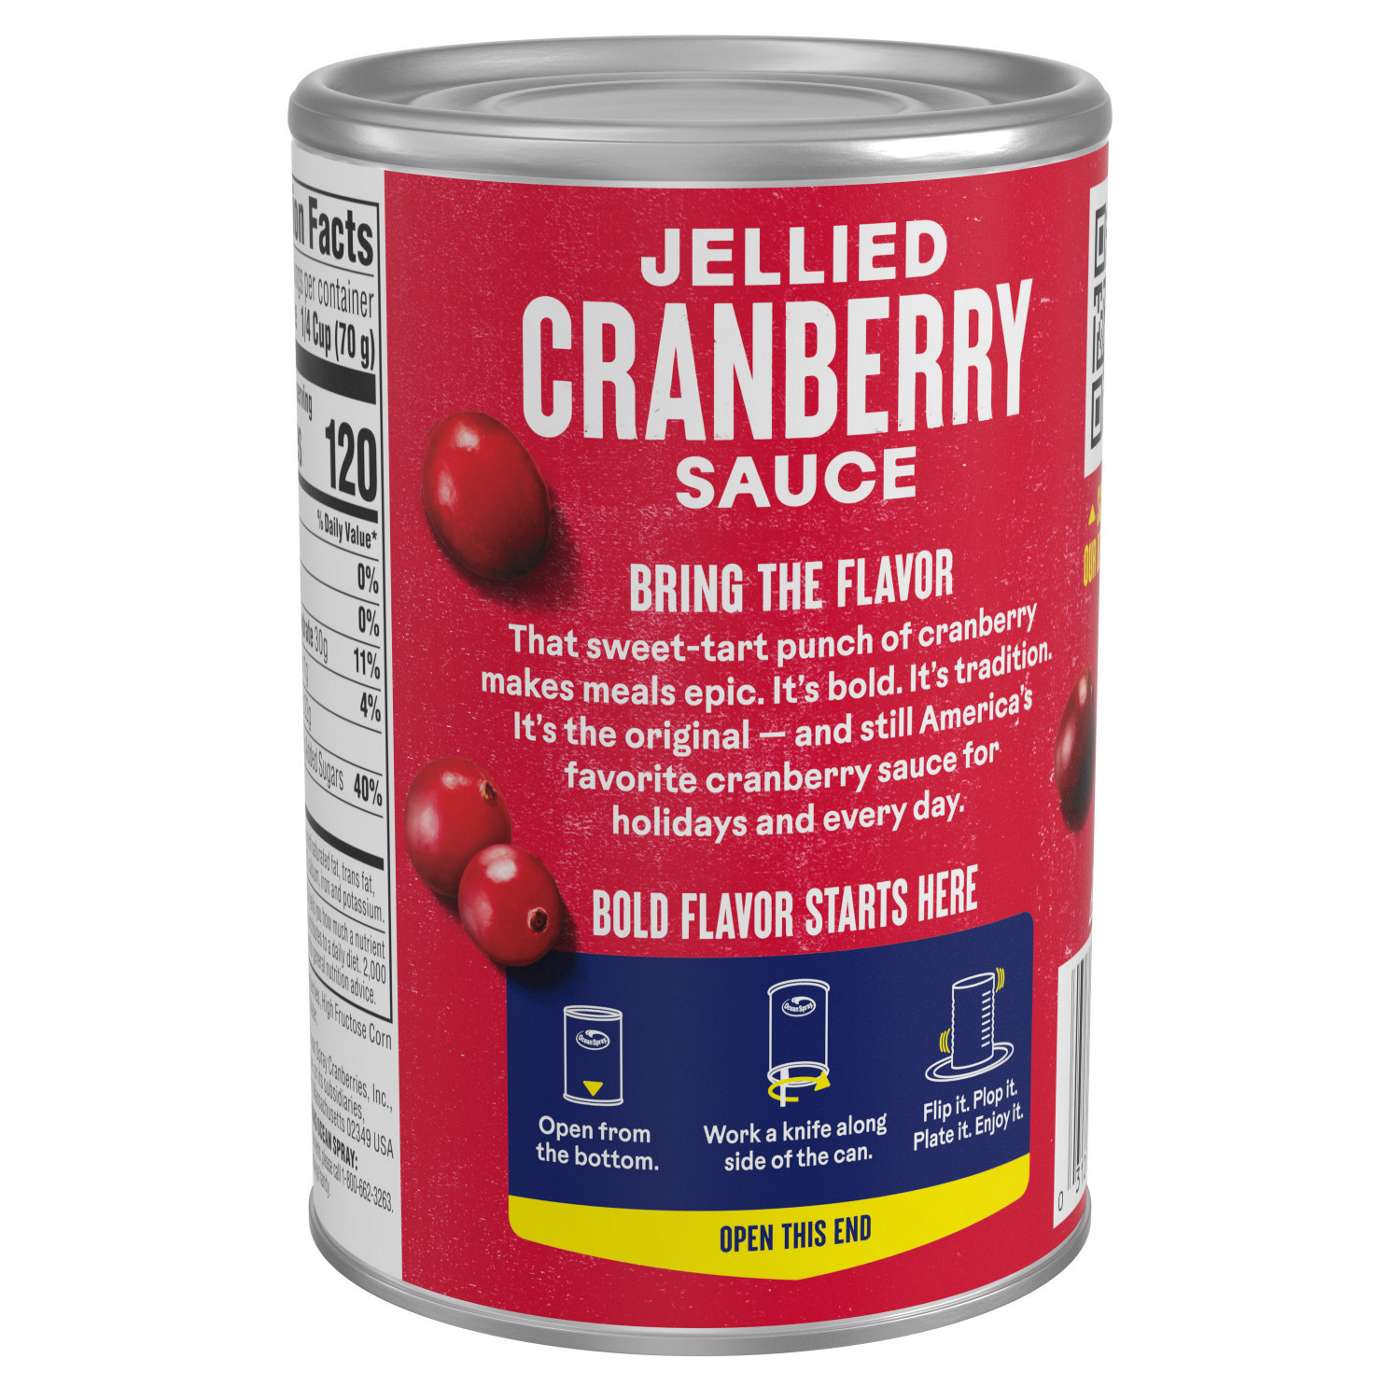 Ocean Spray Jellied Cranberry Sauce; image 6 of 6